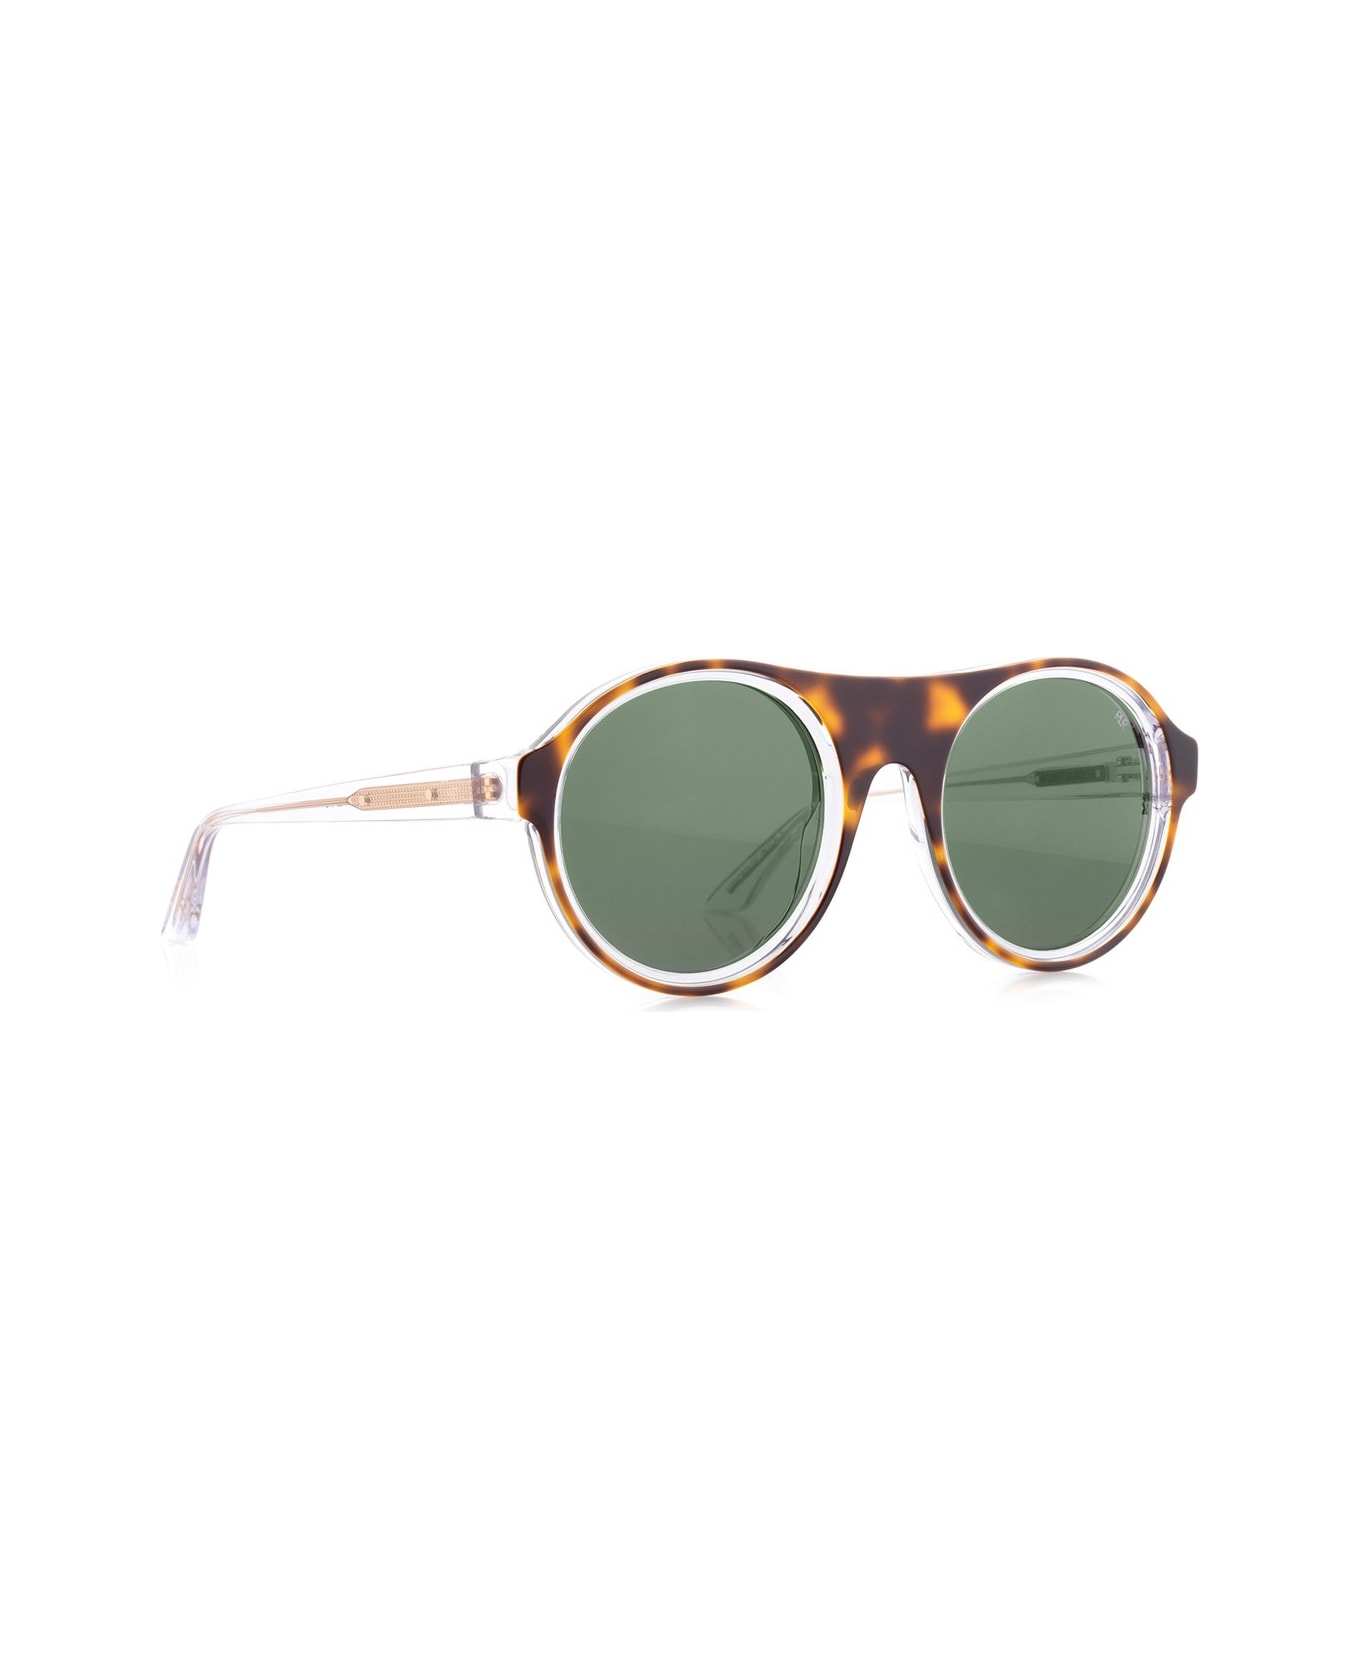 Robert La Roche Rlr S300 Sunglasses - Marrone サングラス